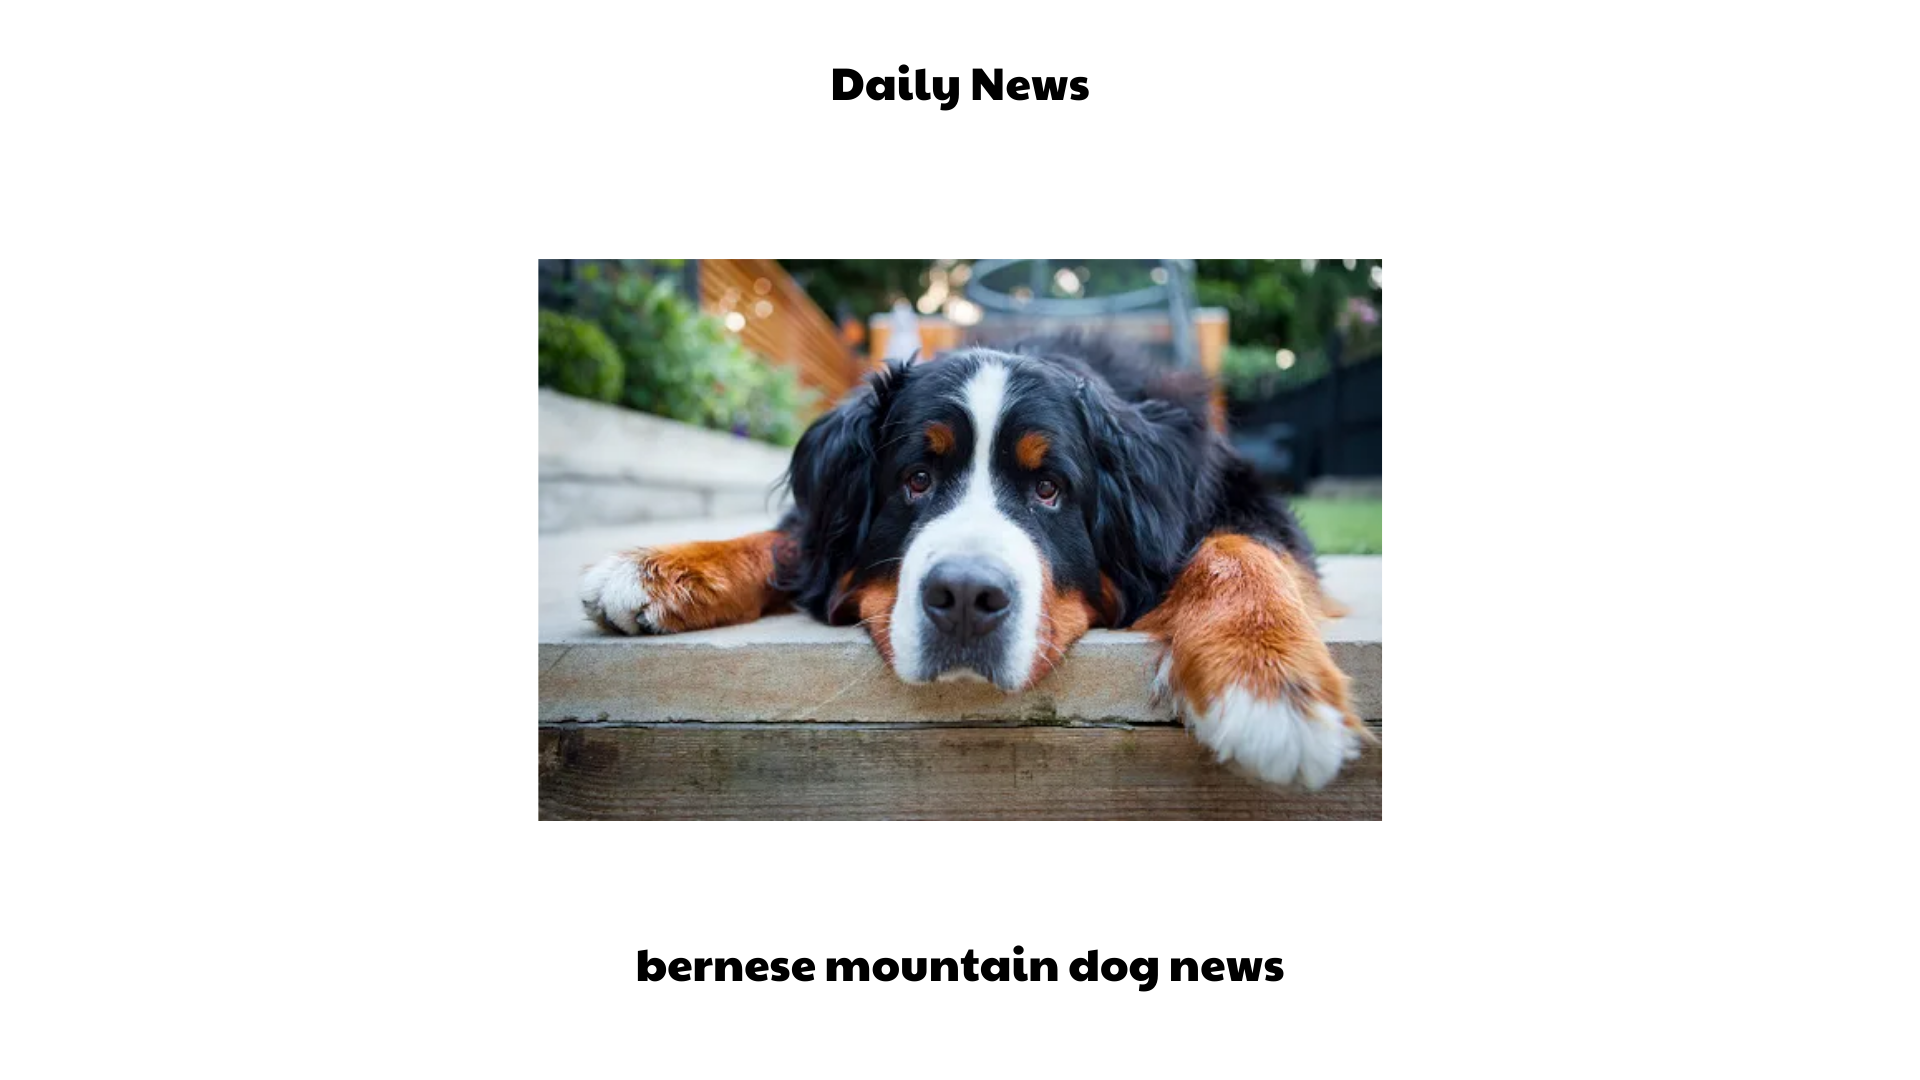 bernese mountain dog news (1)